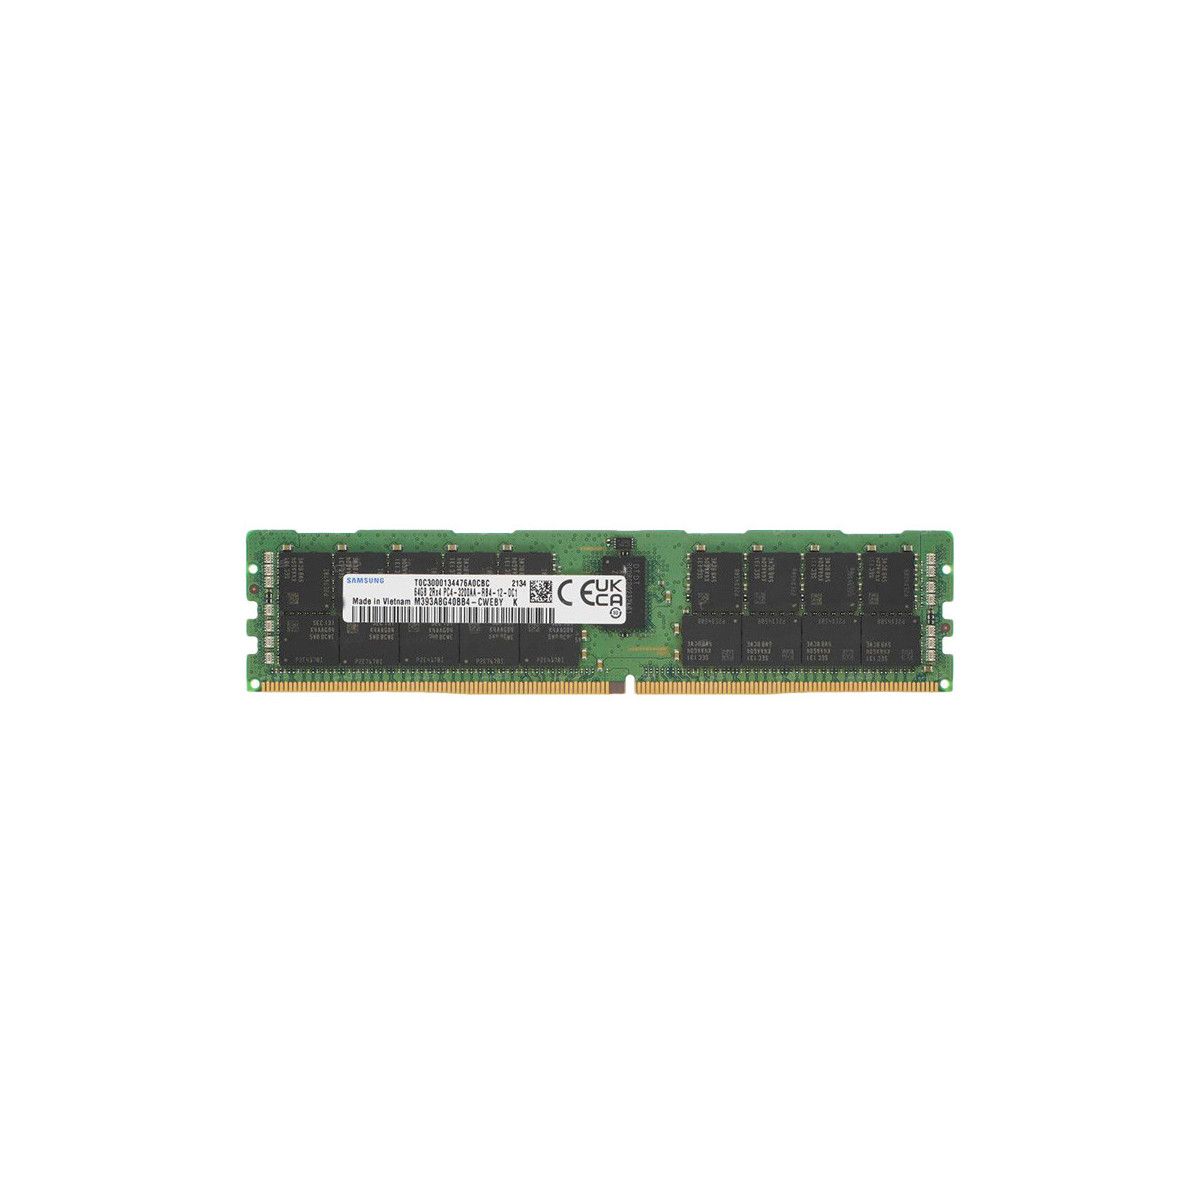 P07650-H21-MS - Memstar 1x 64GB DDR4-3200 RDIMM PC4-25600R - Mem-star OEM compatibile Memoria 1 - Memstar 